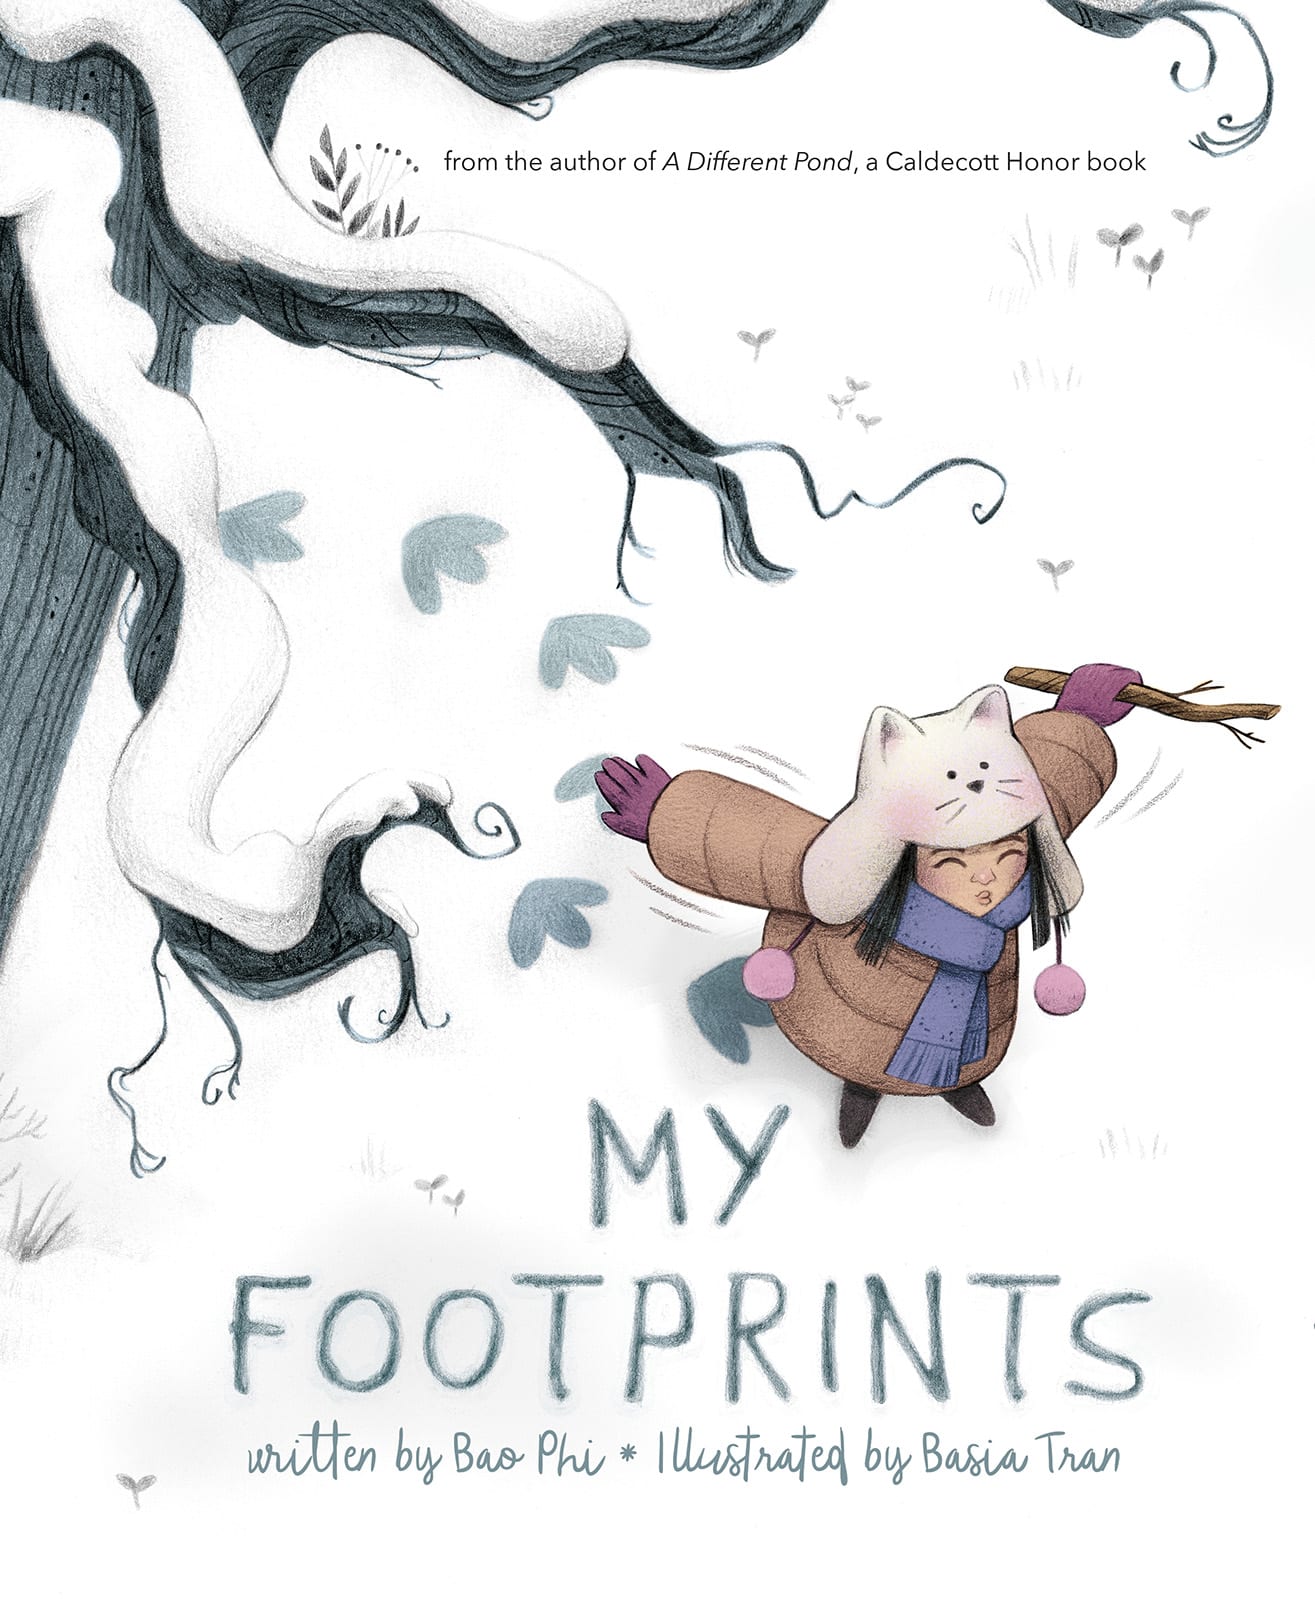 my footprints by bao phi